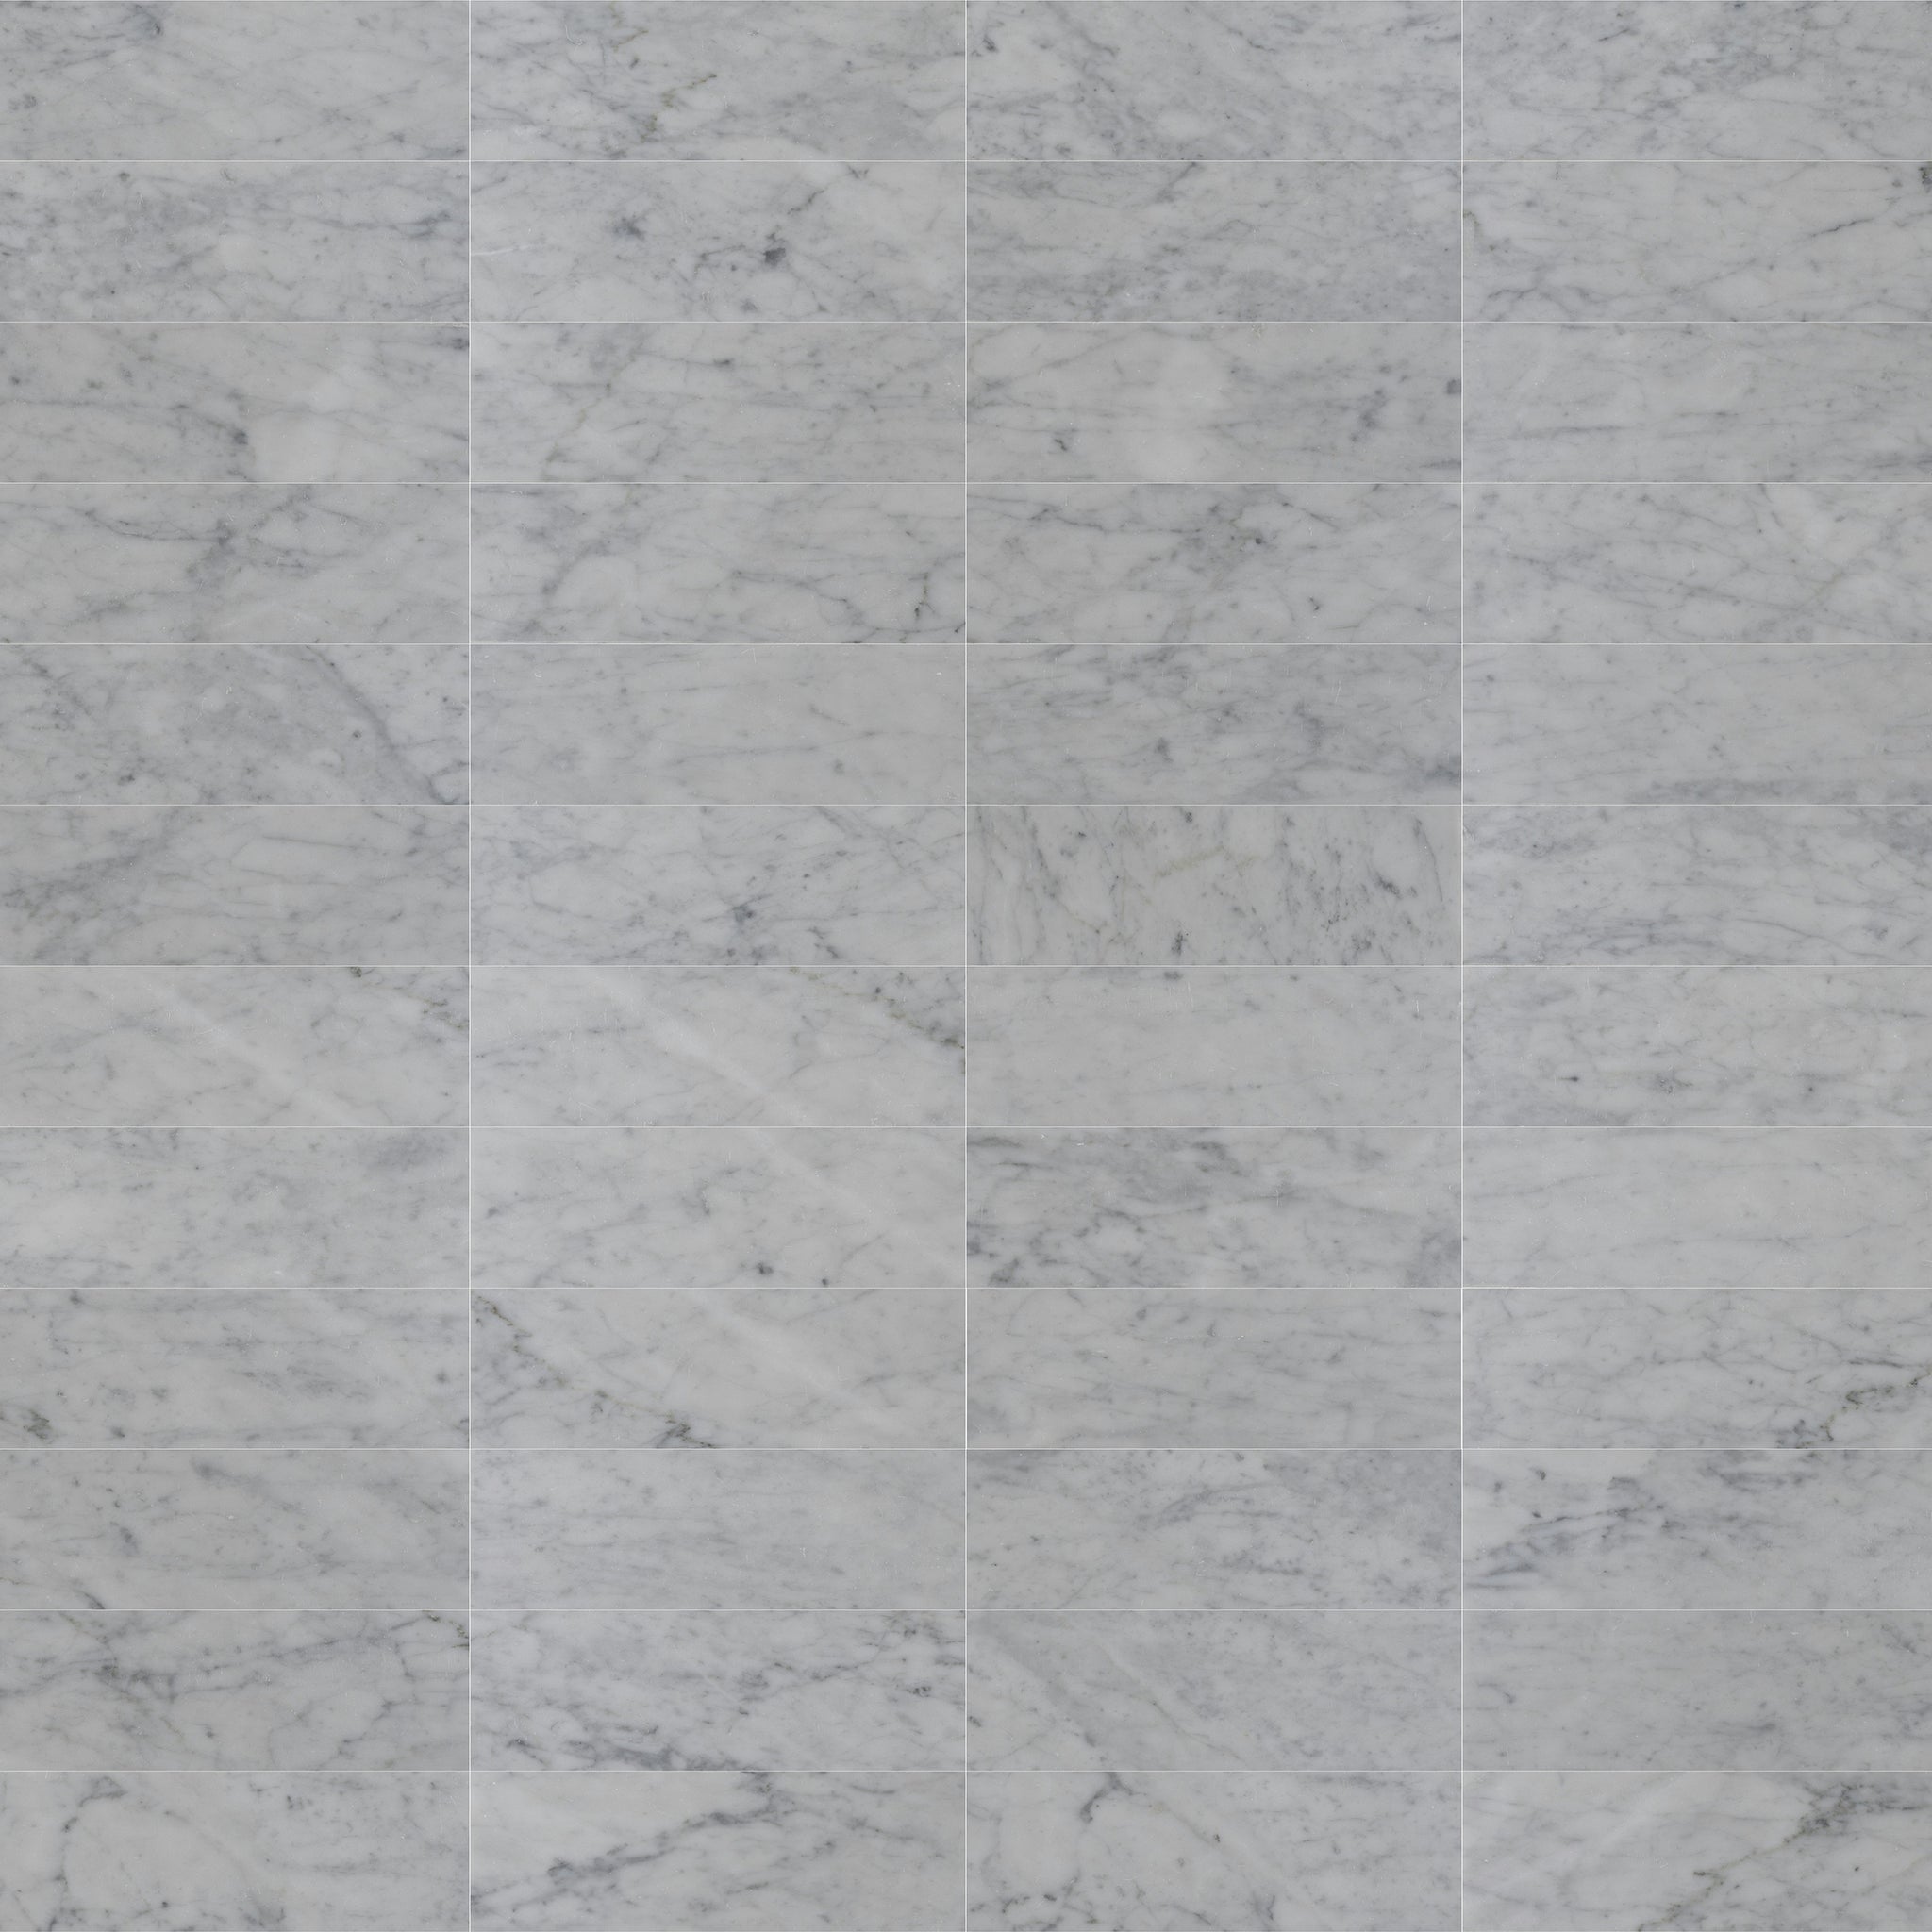 4 X 12 in. Bianco Carrara White Honed Marble Tile